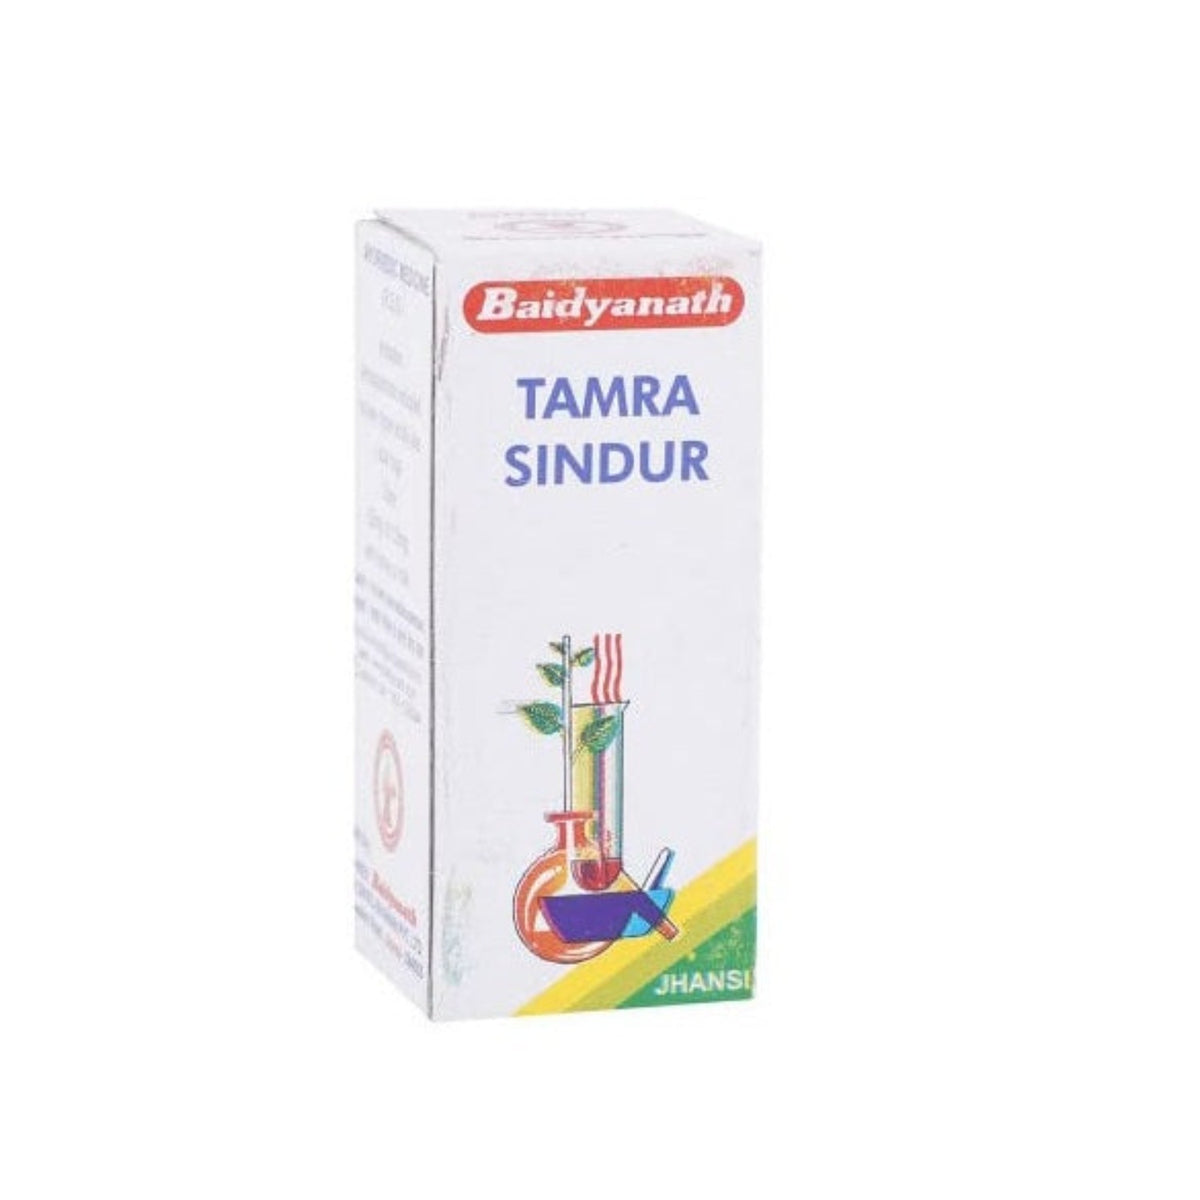 Baidyanath Ayurvedic (Janshi) Tamra Sindoor Powder 2.5gm